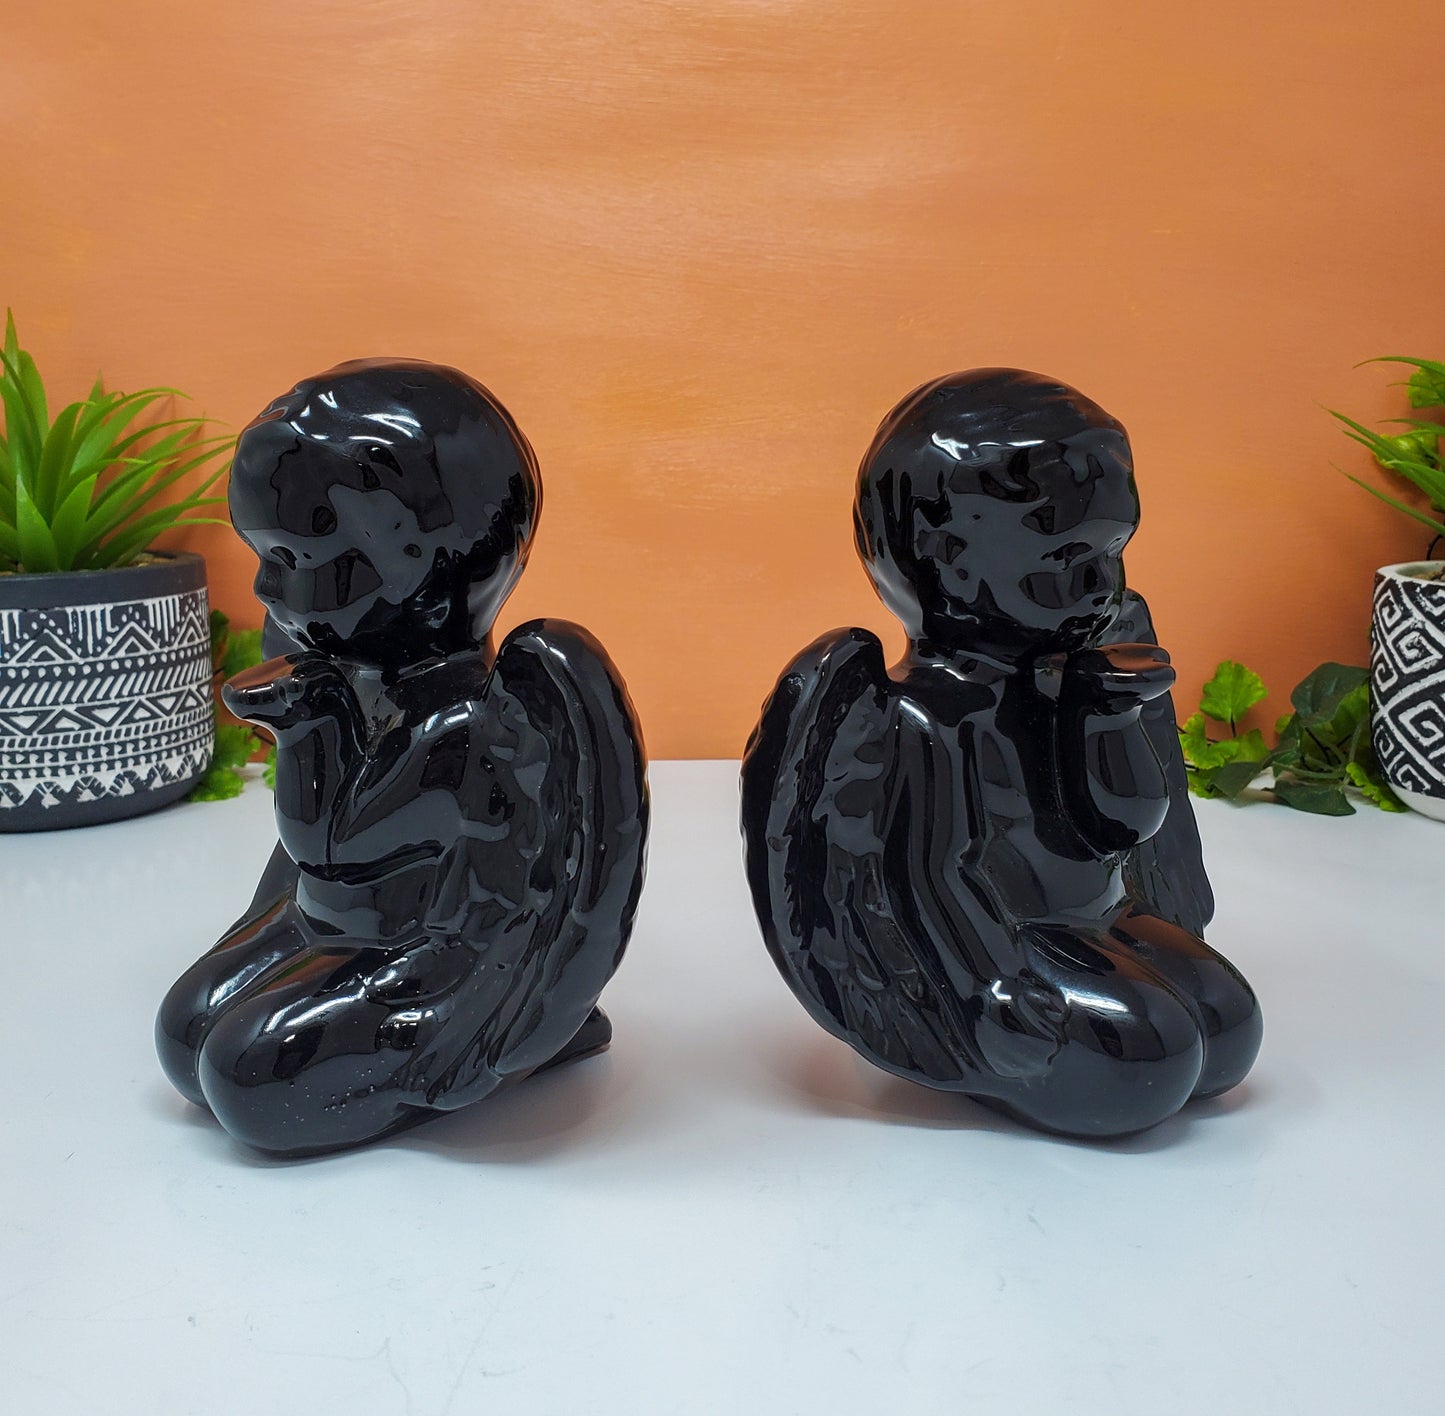 Black Ceramic Cherub Angels Blowing Kisses Statue Figurines | Adorable Angel Cherub Home Decoration - Pair 6" Tall